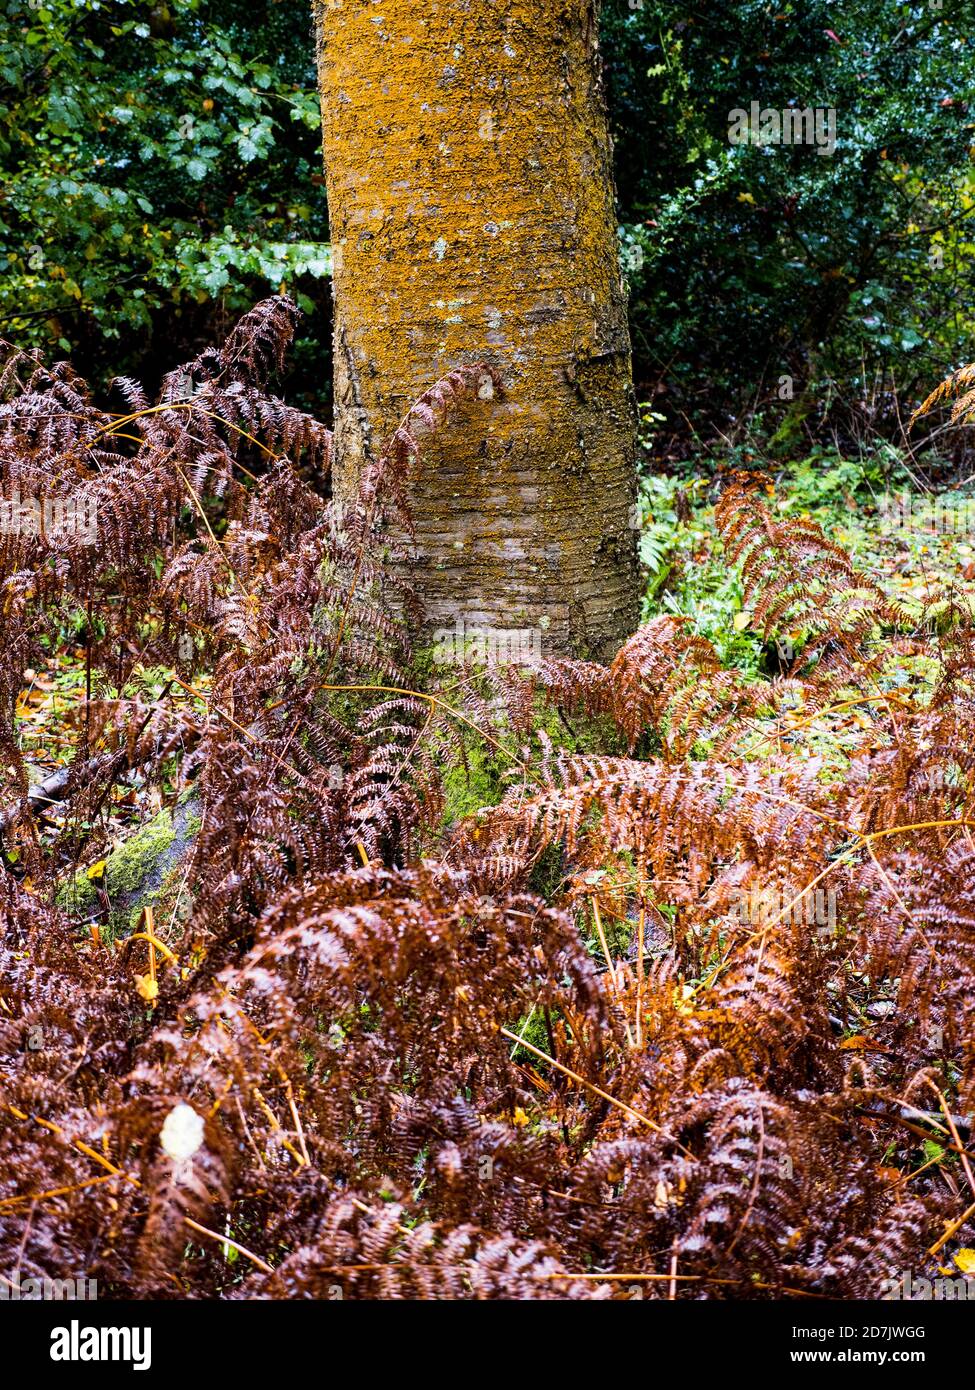 Lichen buena calidad del aire, paisaje del bosque de otoño, Lichen amarillo, maderas, esquina de las marcas, Oxfordshire, Inglaterra, Reino Unido, GB. Foto de stock